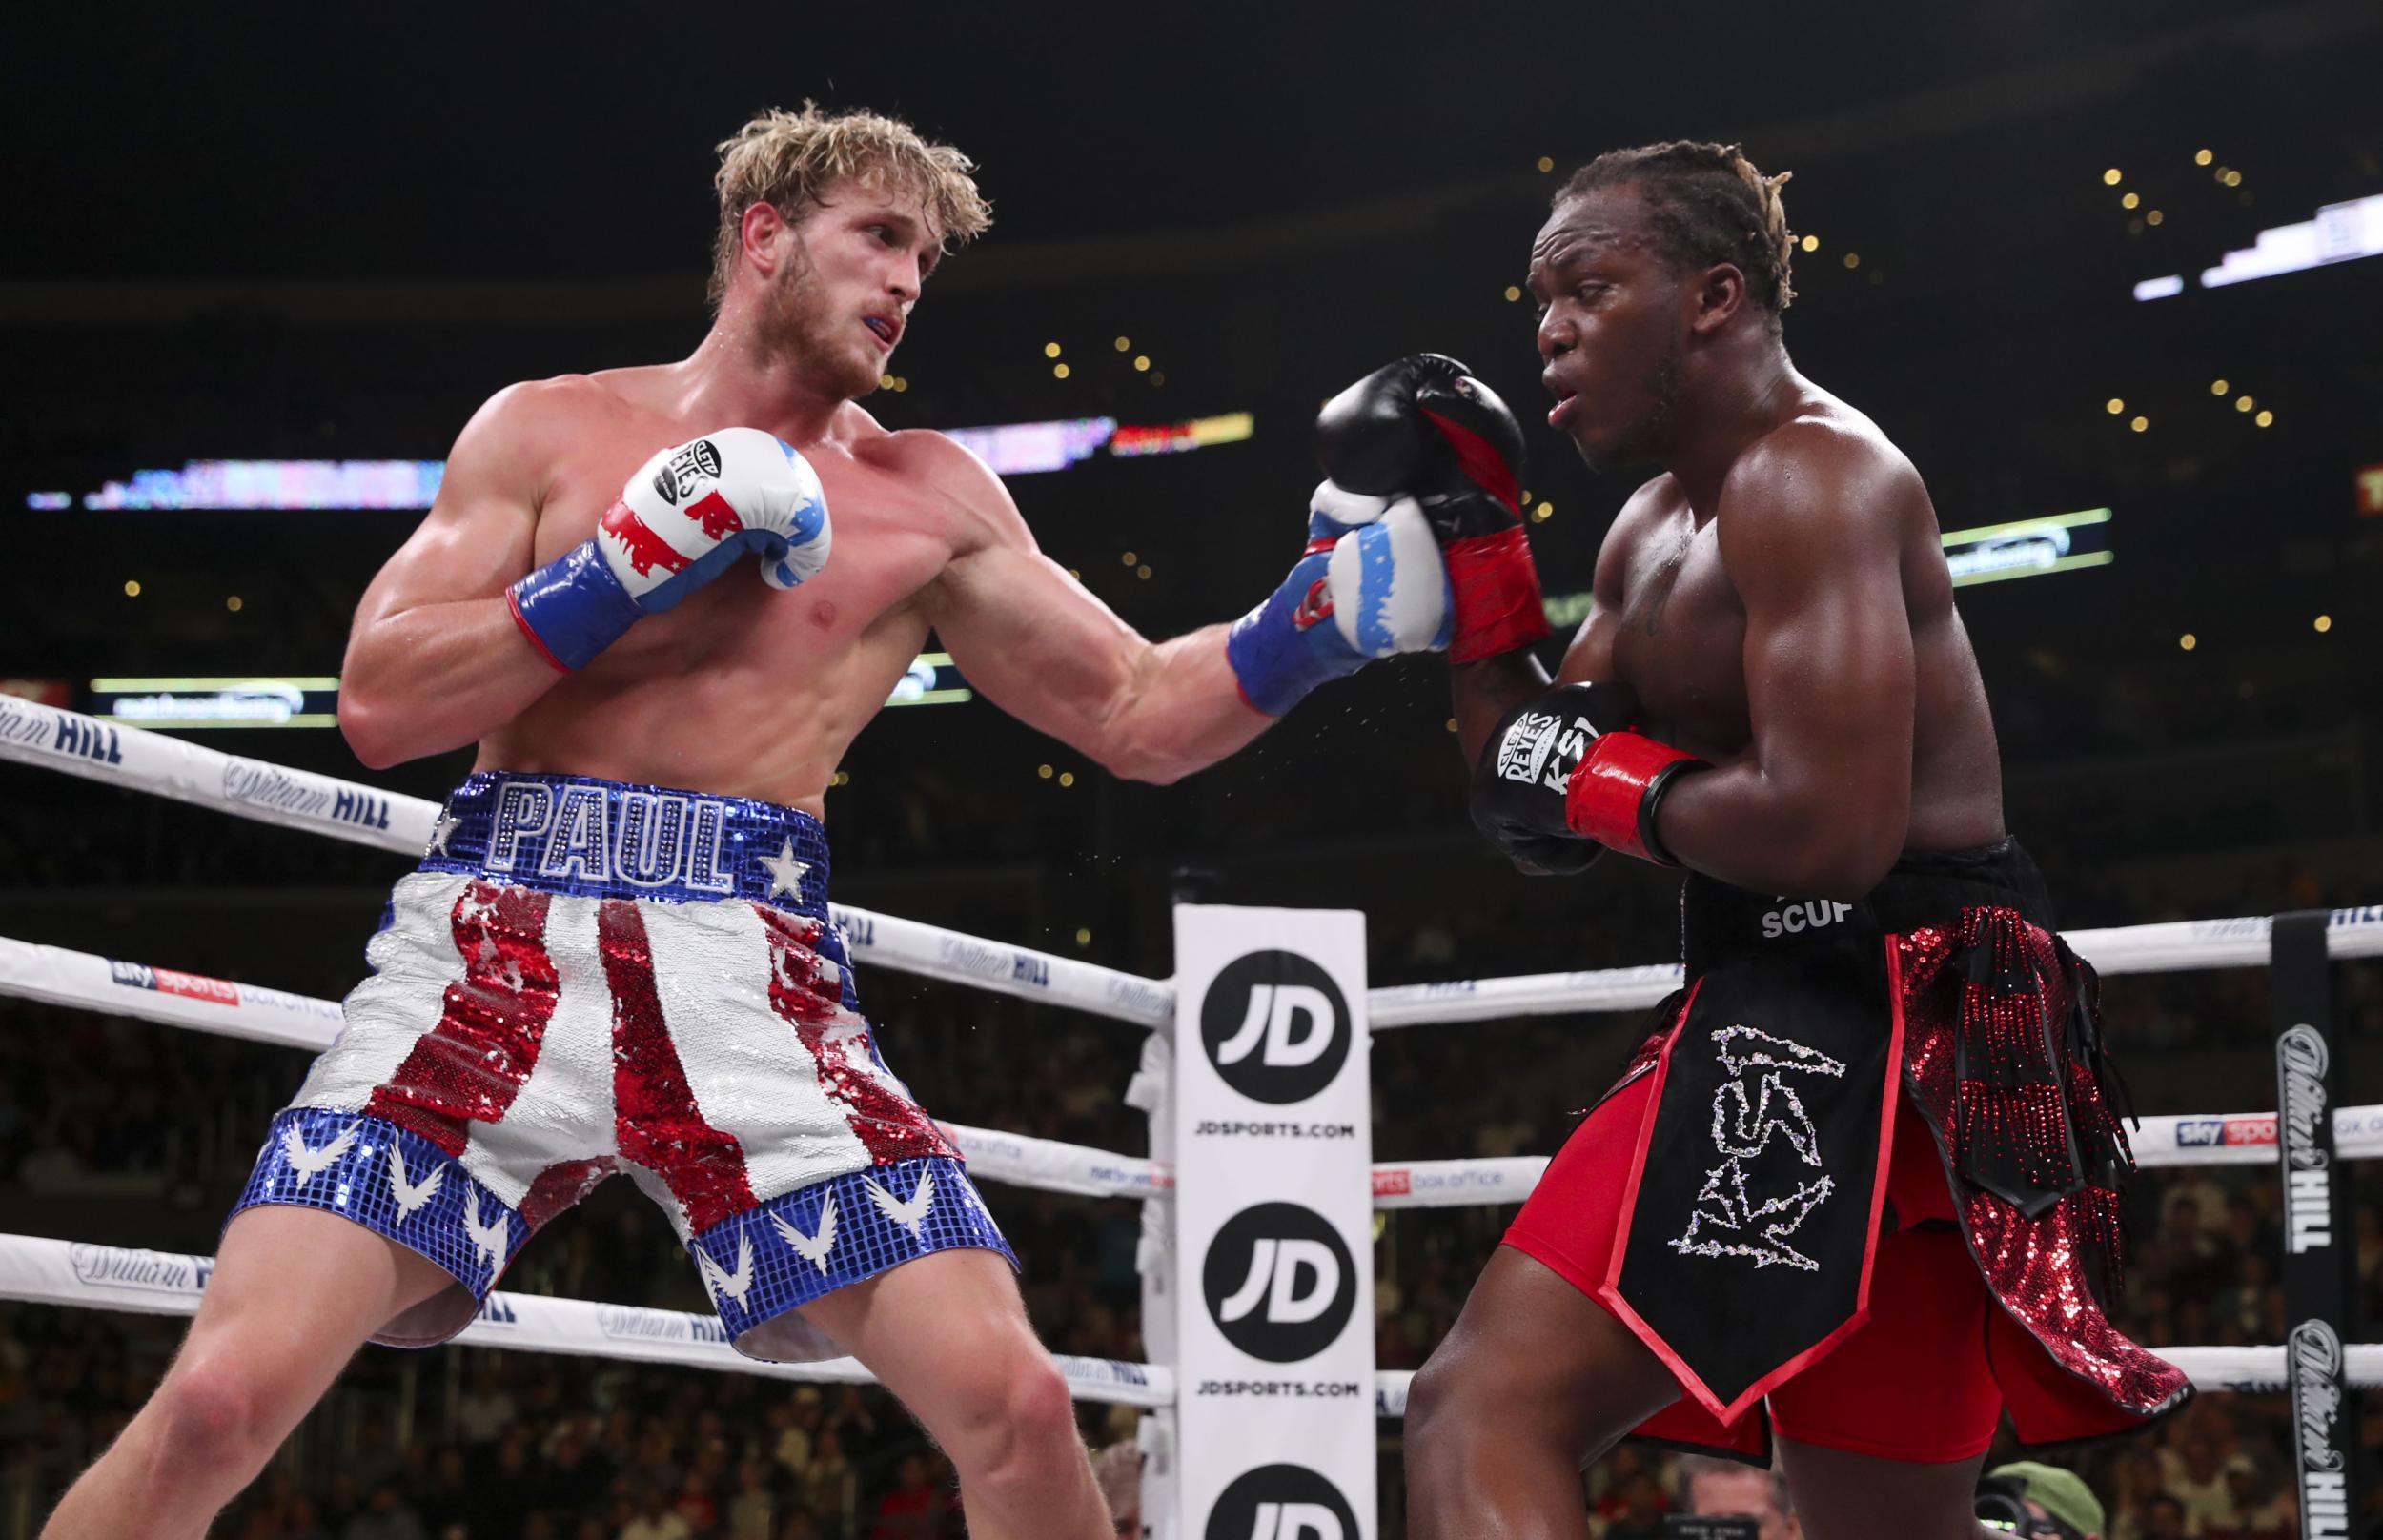 Ksi Vs Logan Paul Fight Result Londoner Wins Youtube Boxing.